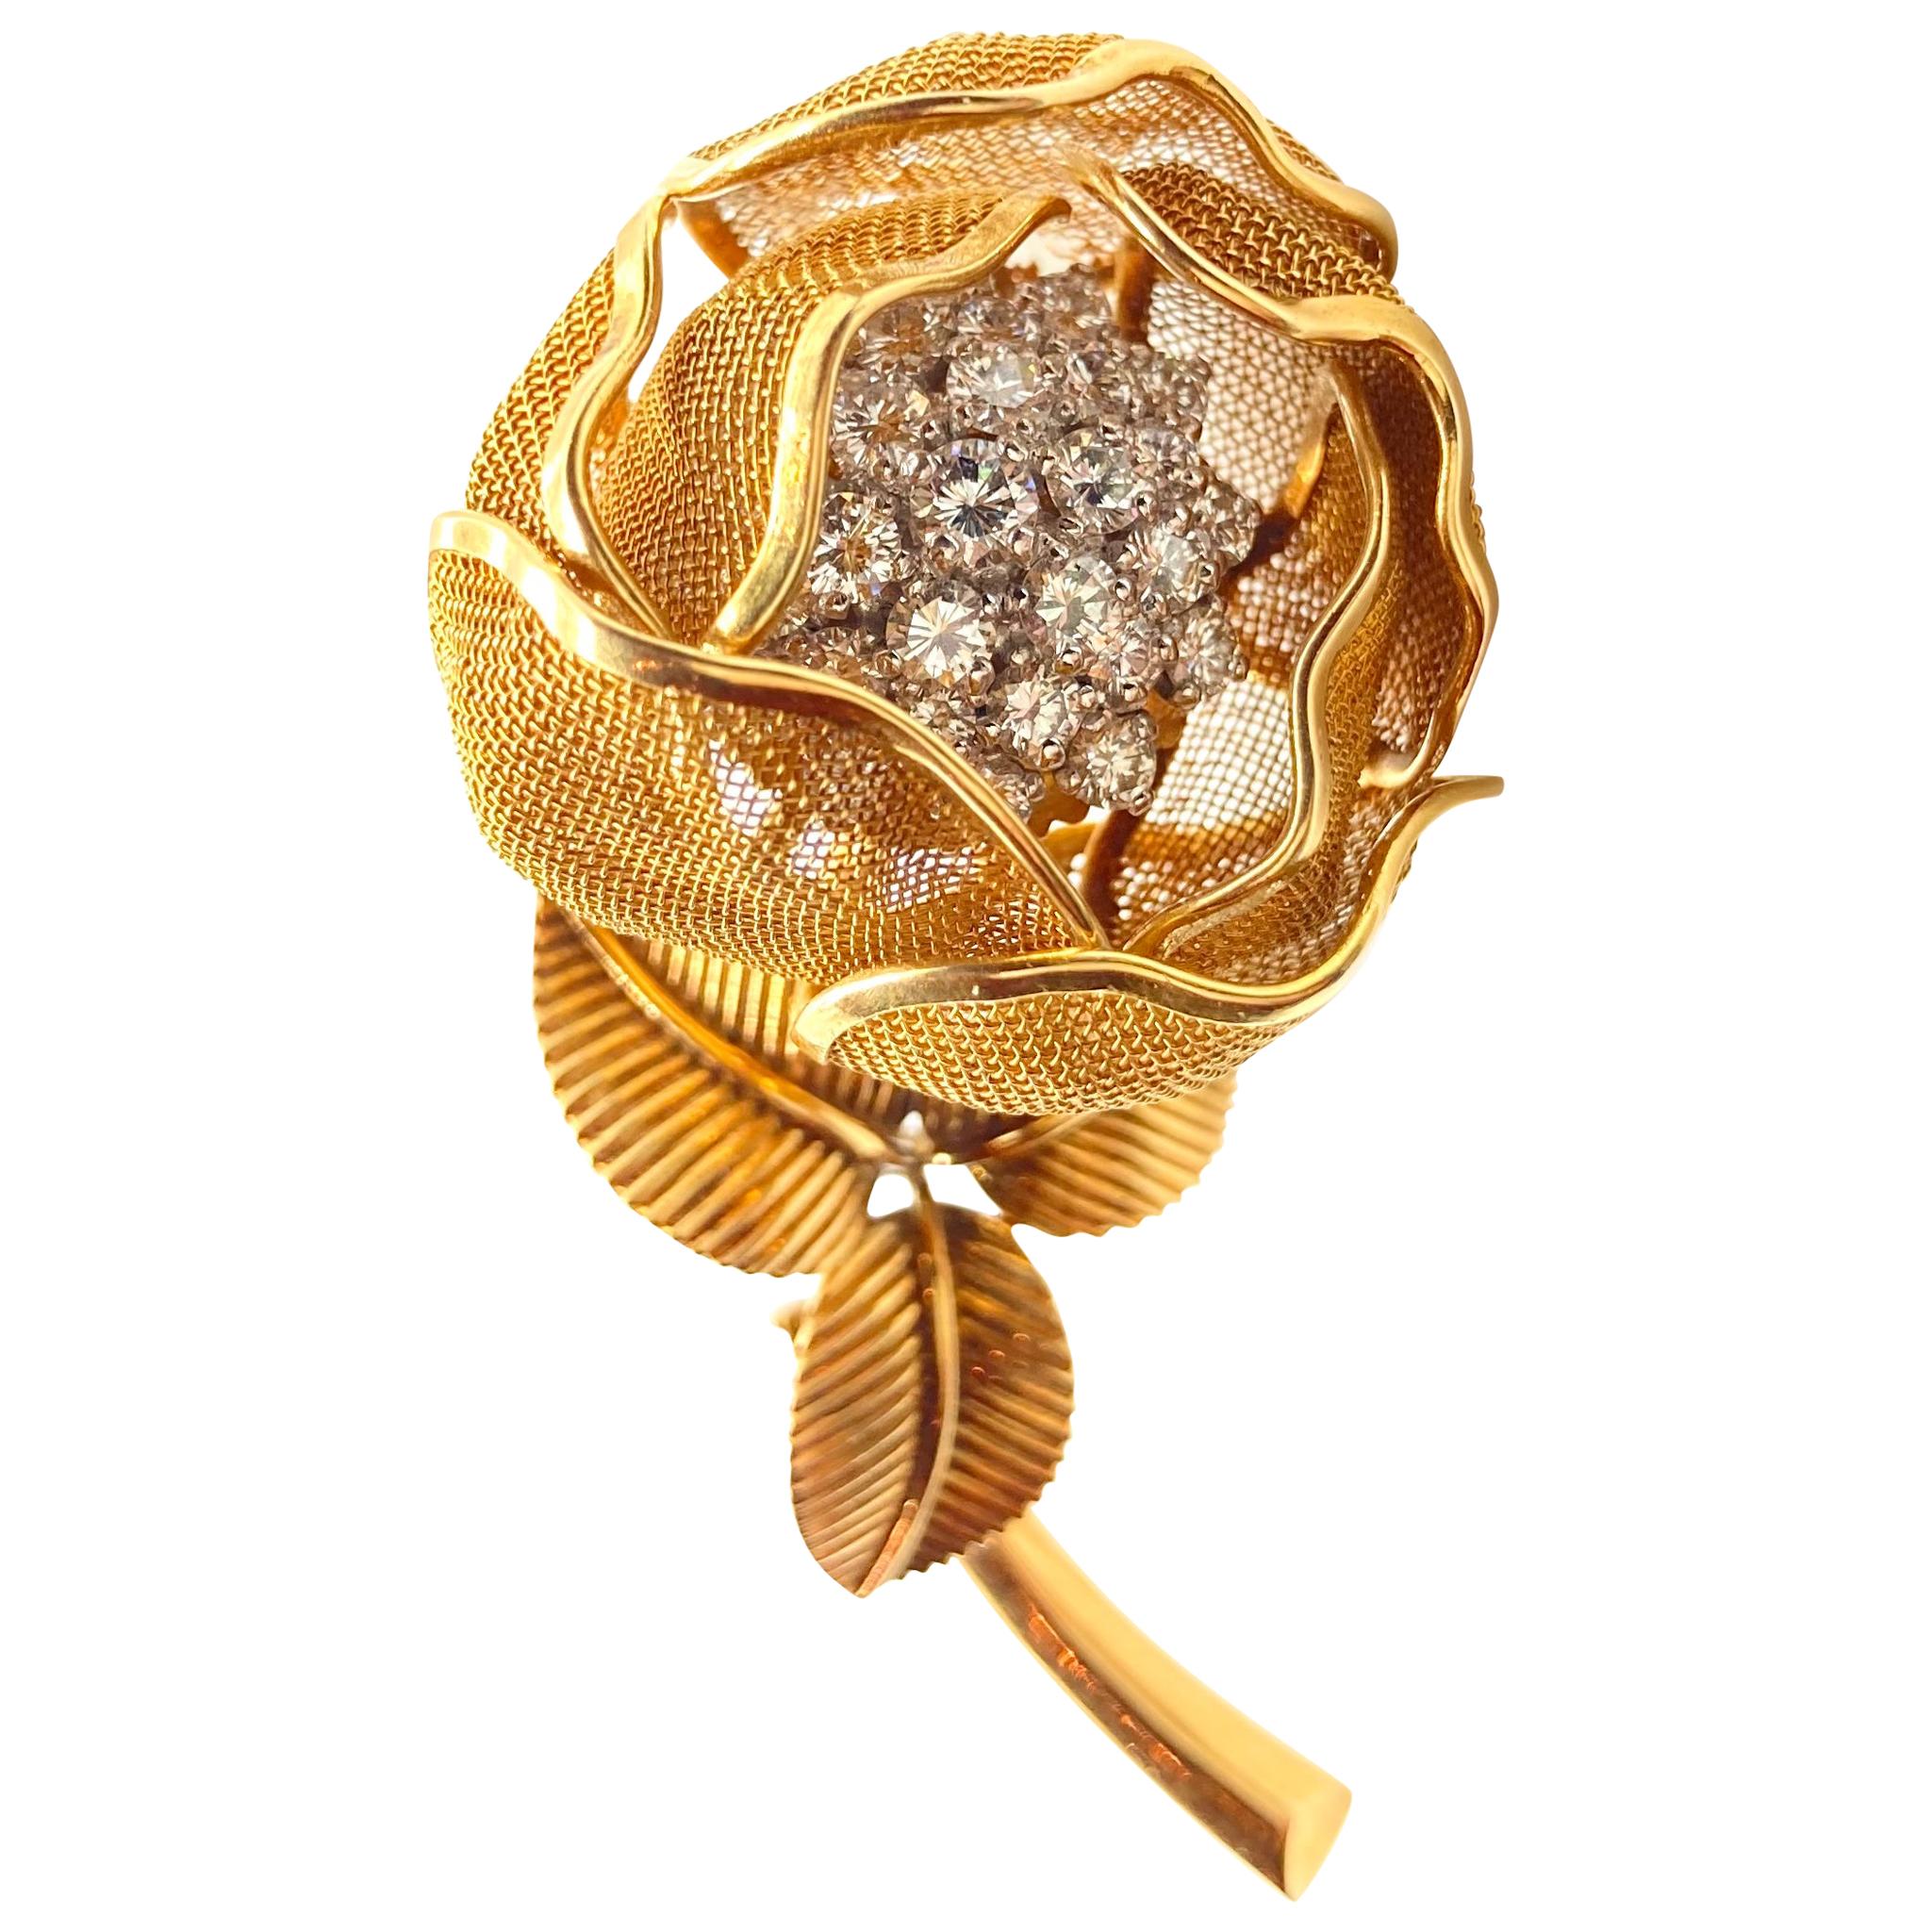 Cartier Diamond Flower Brooch with Adjustable Petals